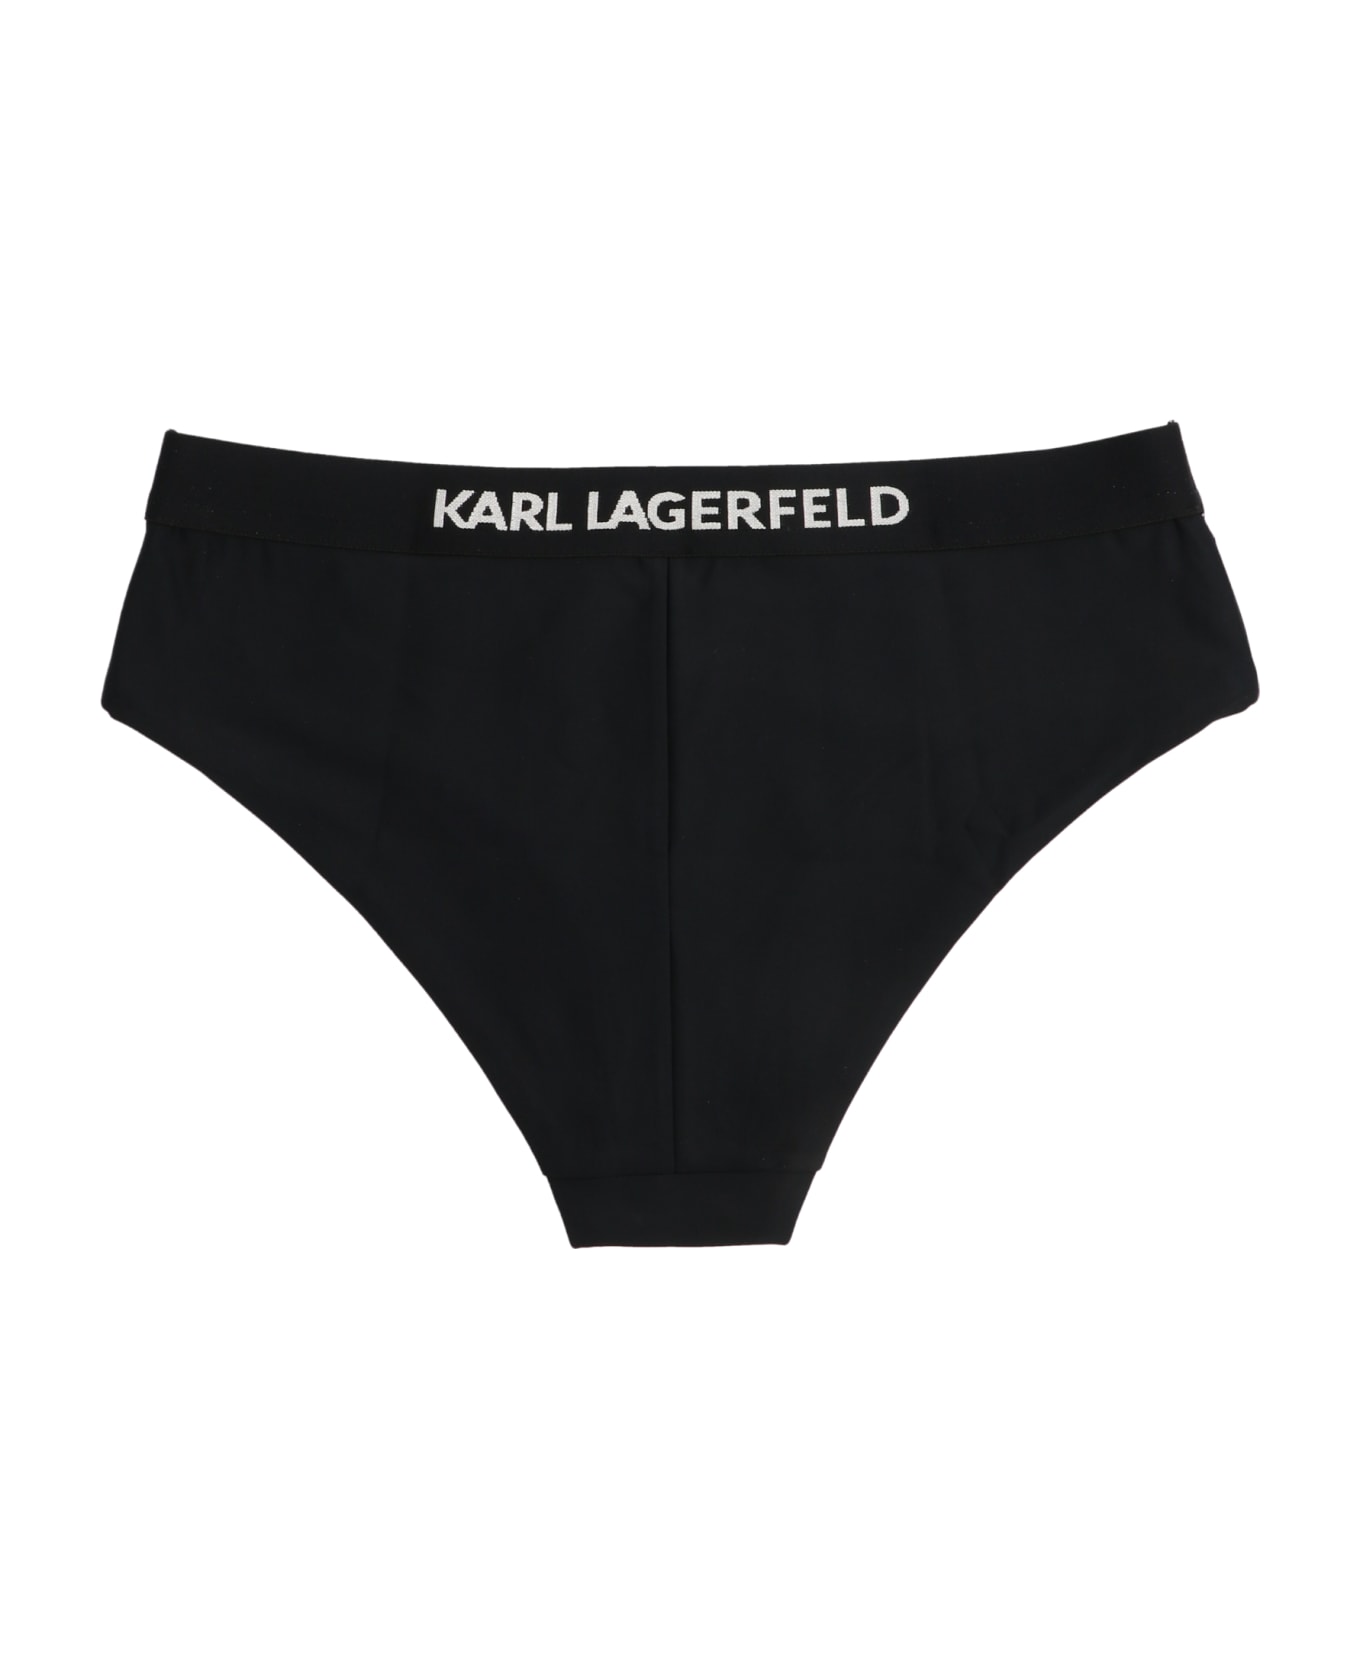 Karl Lagerfeld 'karl' Logo Bikini Bottom - Black  